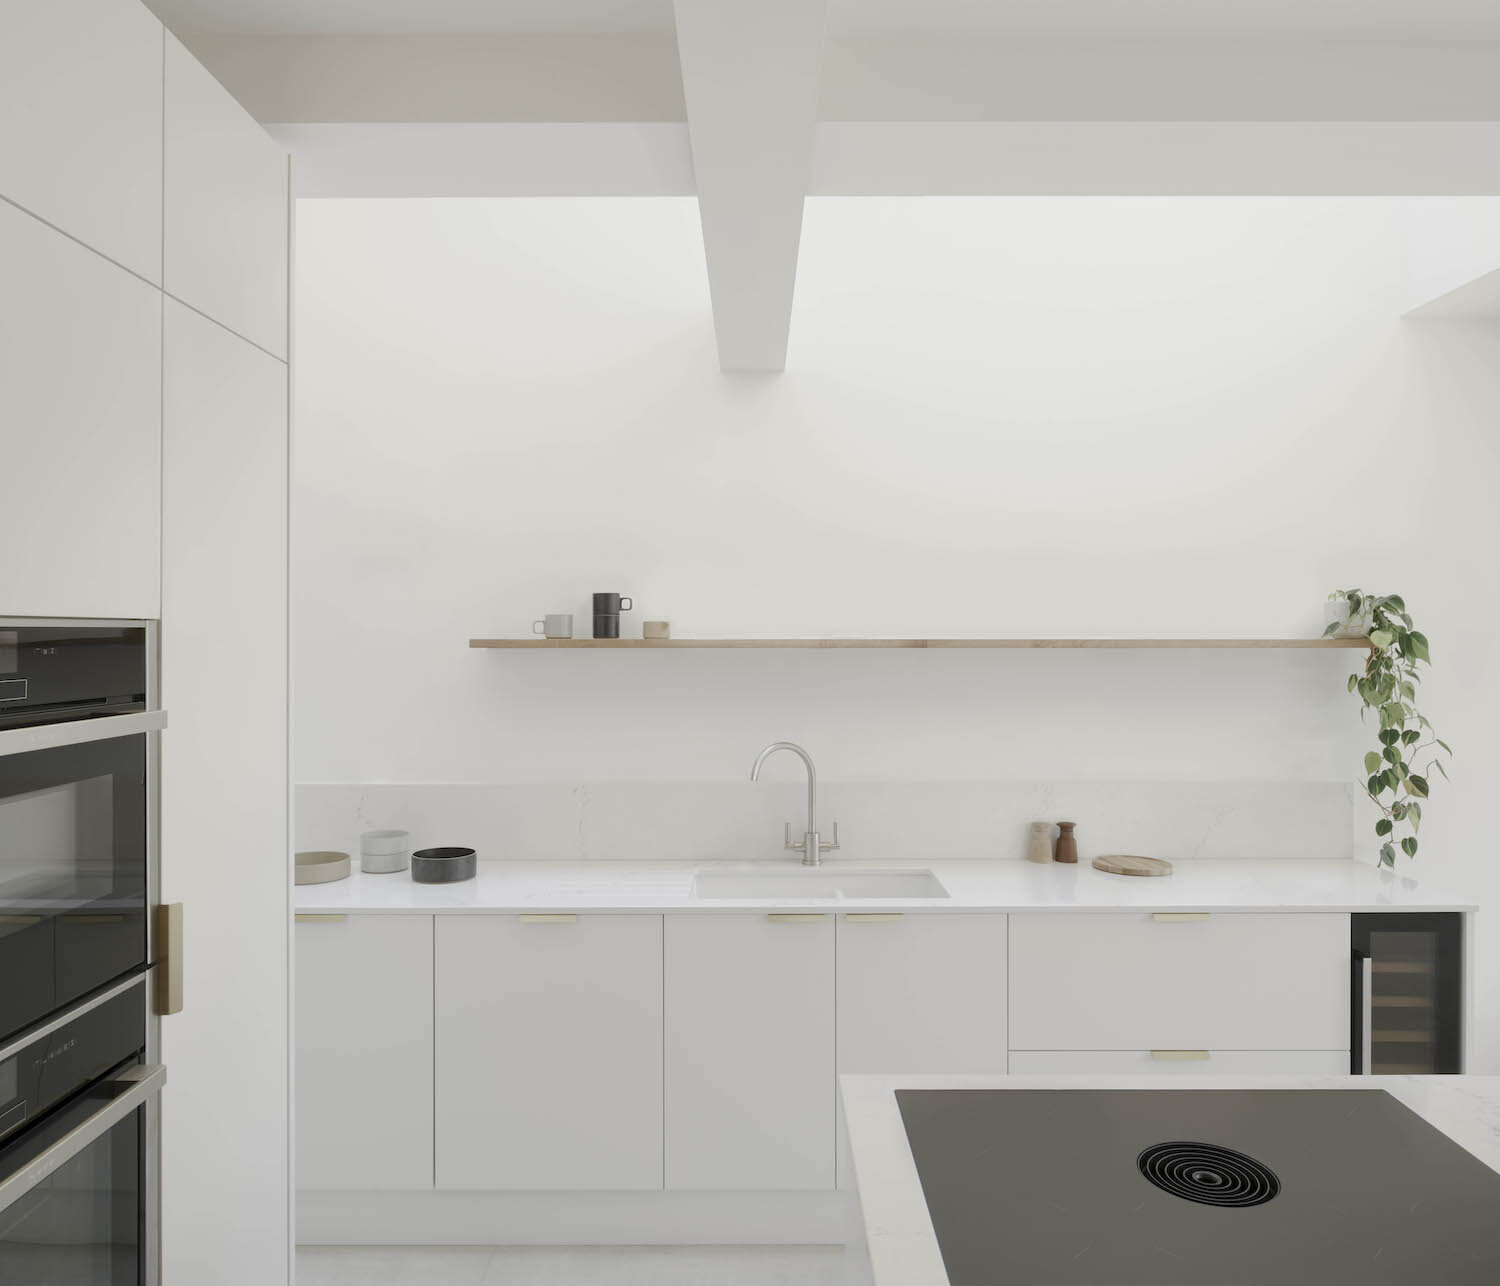 Kieran Wardle Architects — We Design Homes